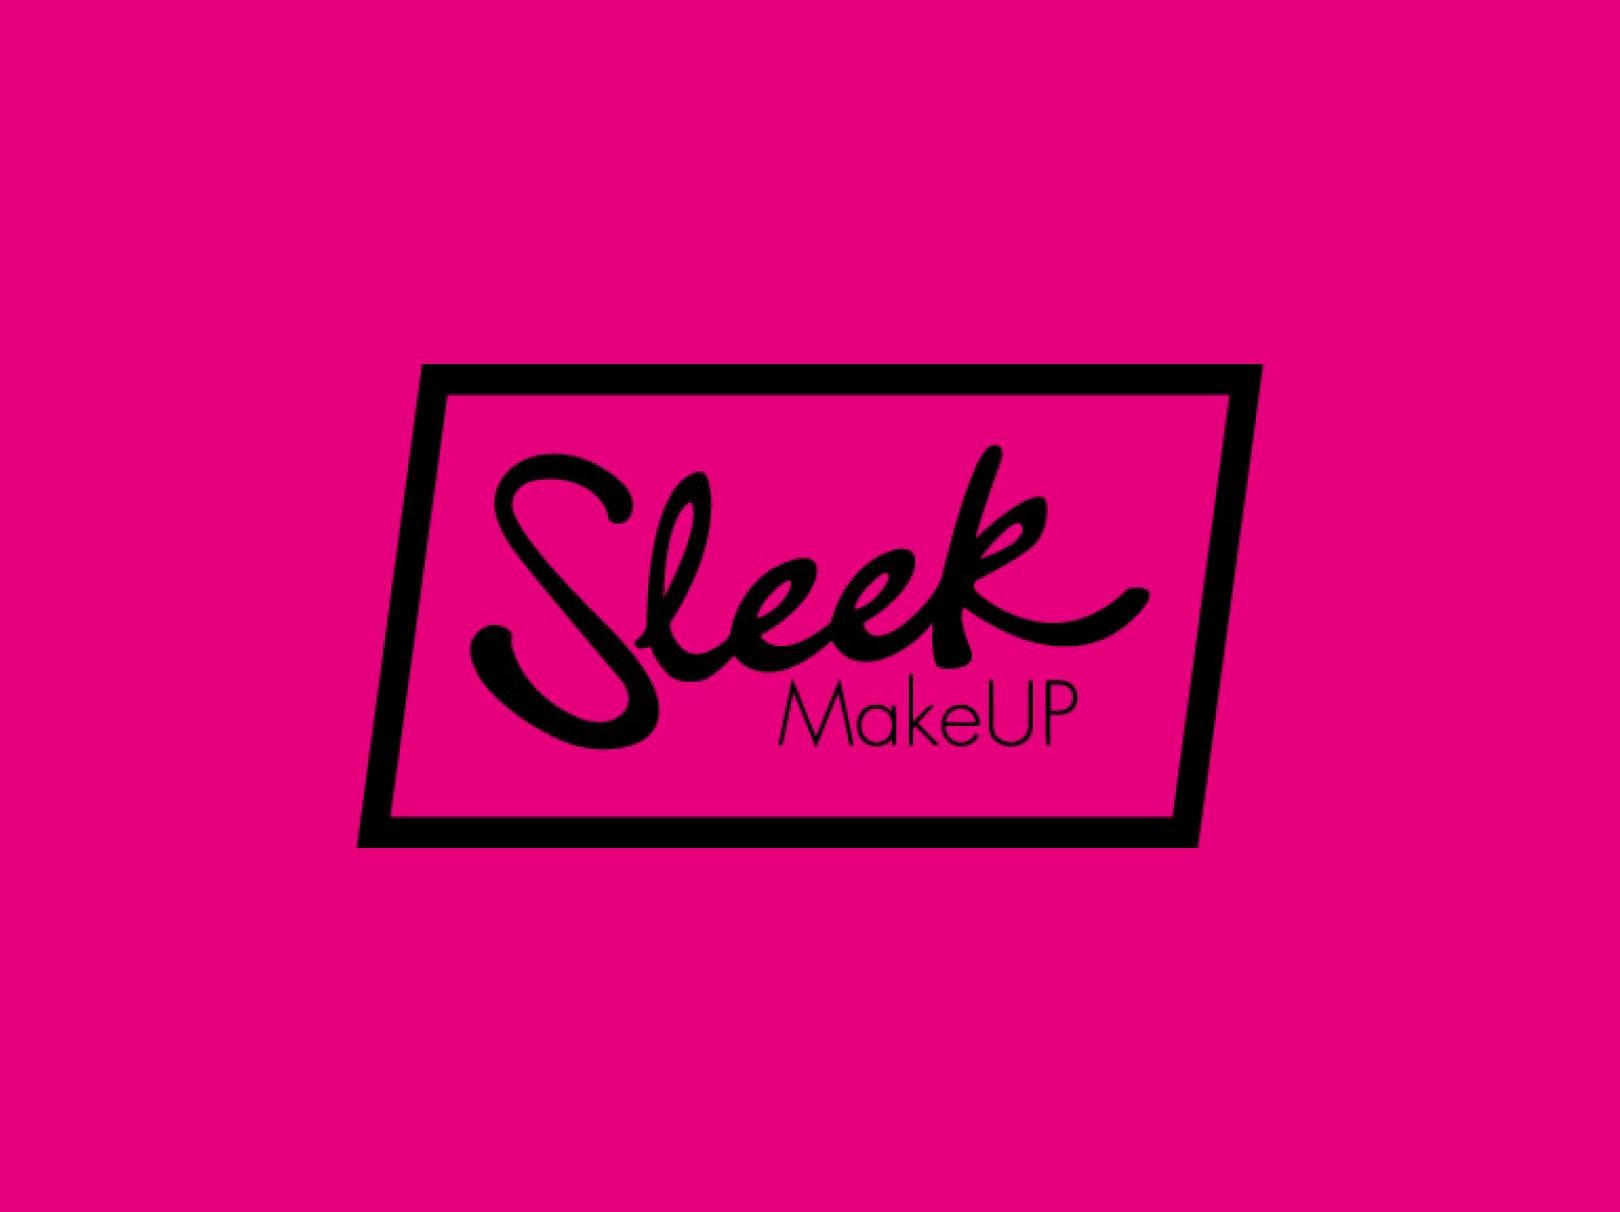 Black Sleek Logo on Pink Background